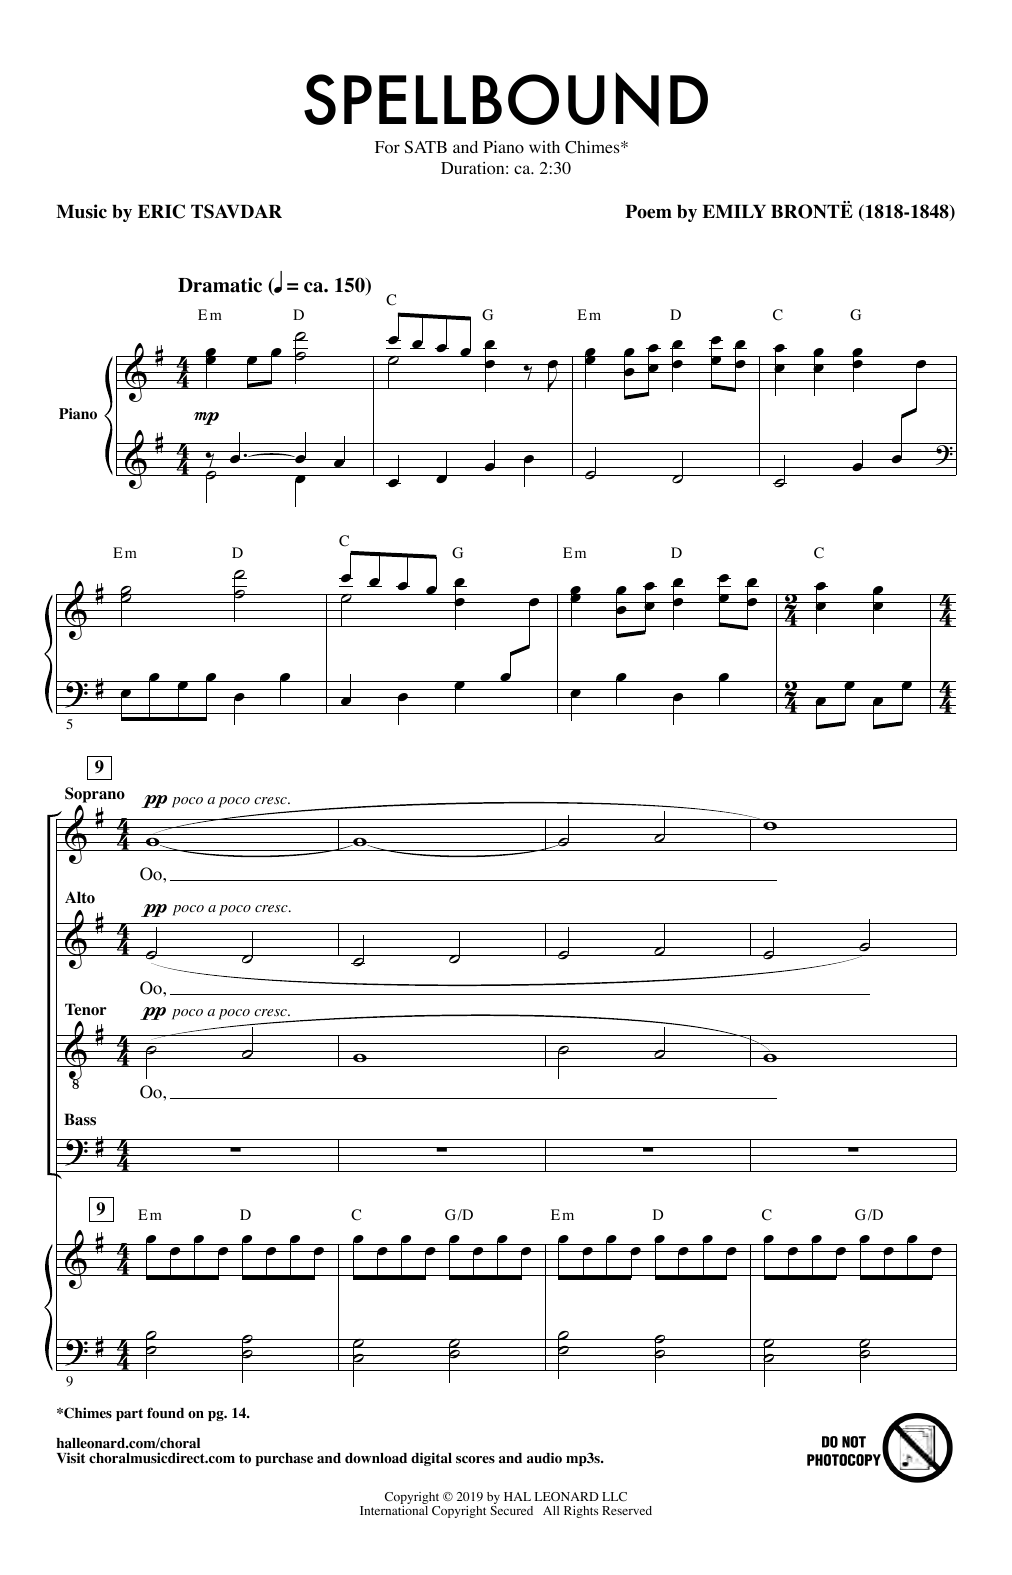 Eric Tsavdar Spellbound Sheet Music Notes & Chords for SATB Choir - Download or Print PDF